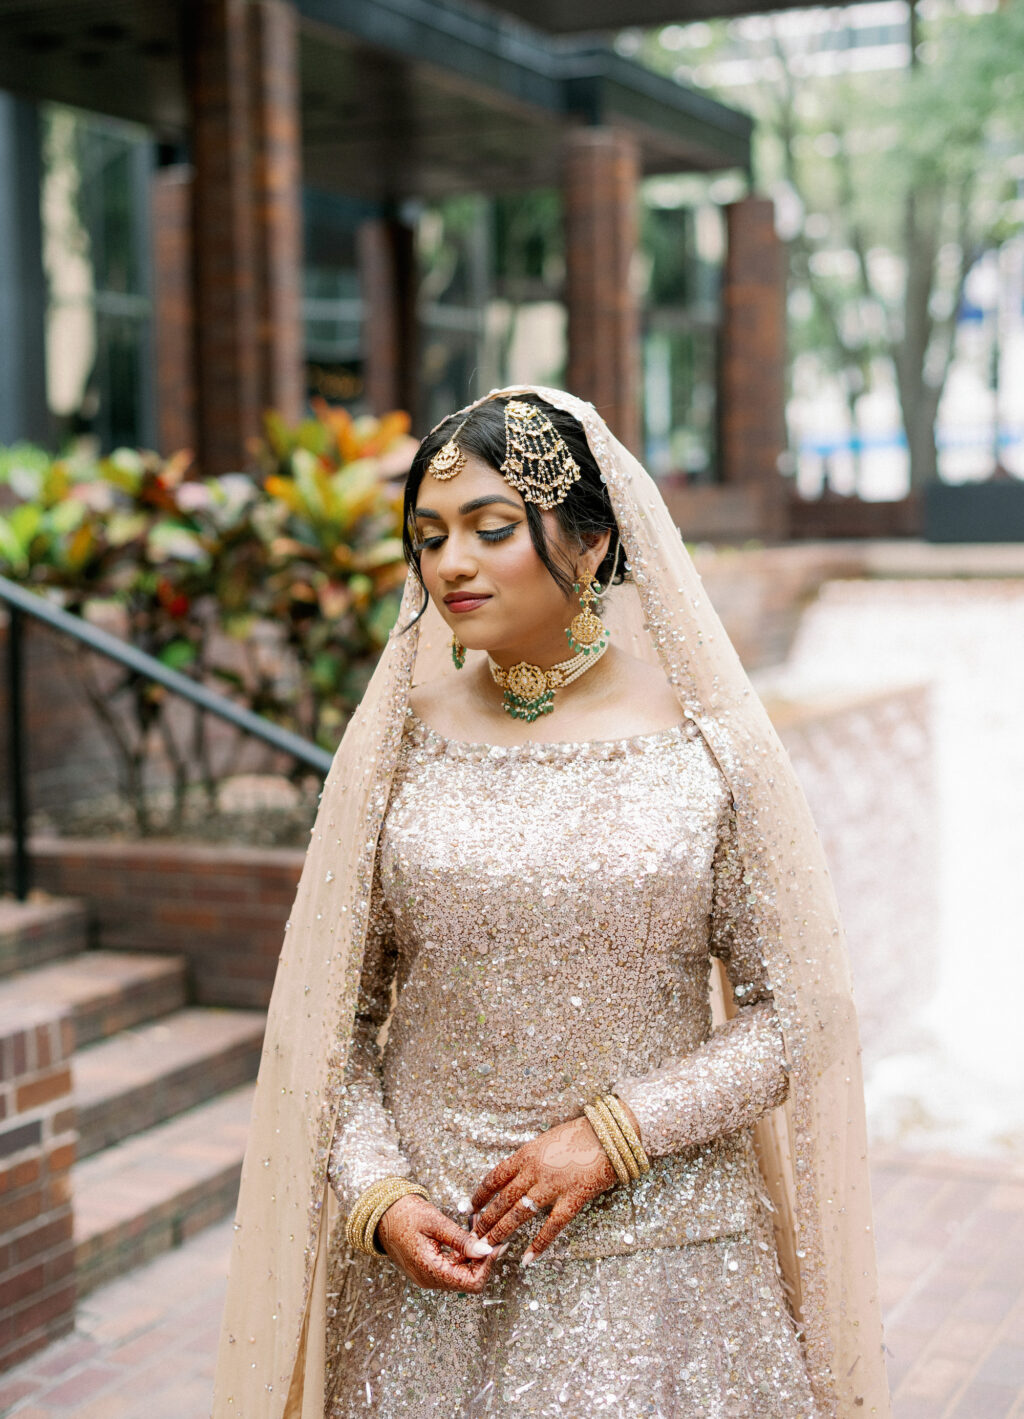 Bridal Glamour Portrait | Beige Cream Lehenga Dress Ideas | Indian Wedding Traditions | Tampa Bay Videographer Shannon Kelly Films | Photographer Dewitt For Love